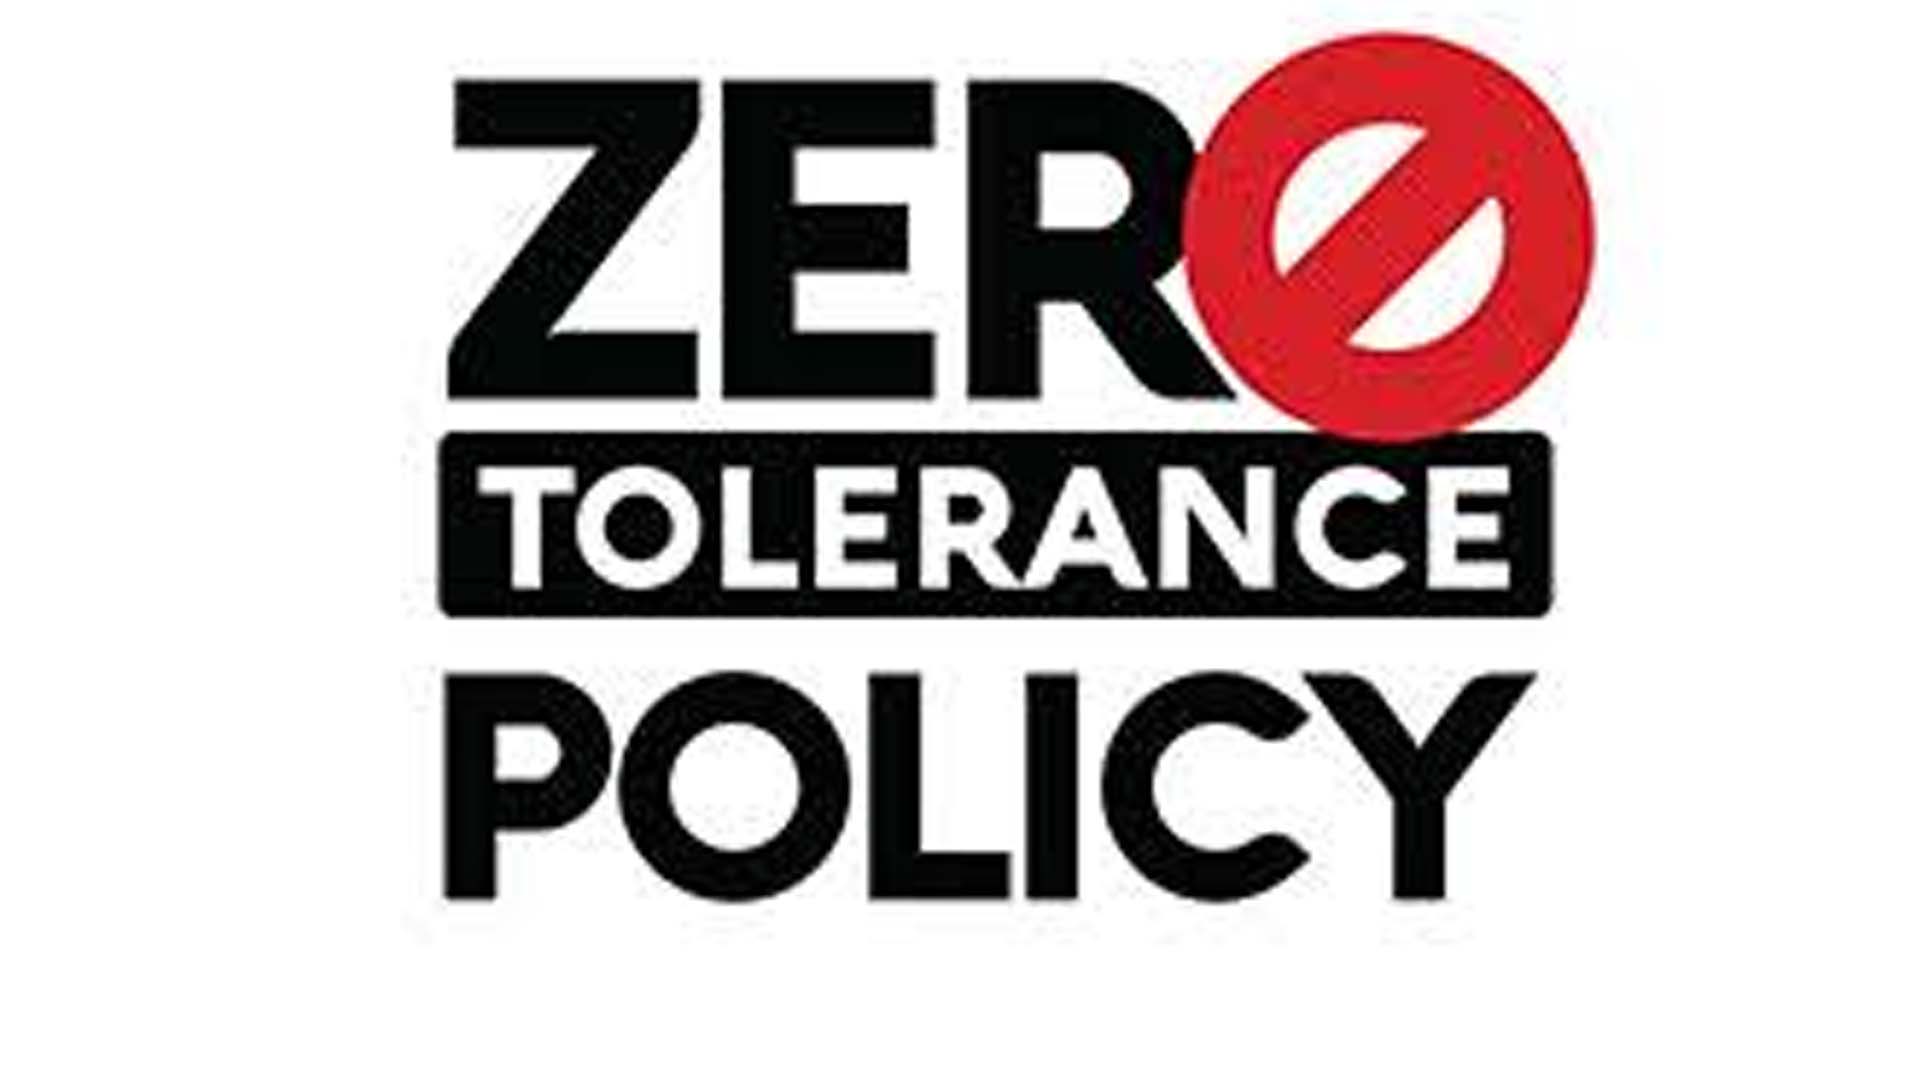 Zero tolerance policy DNA News Agency